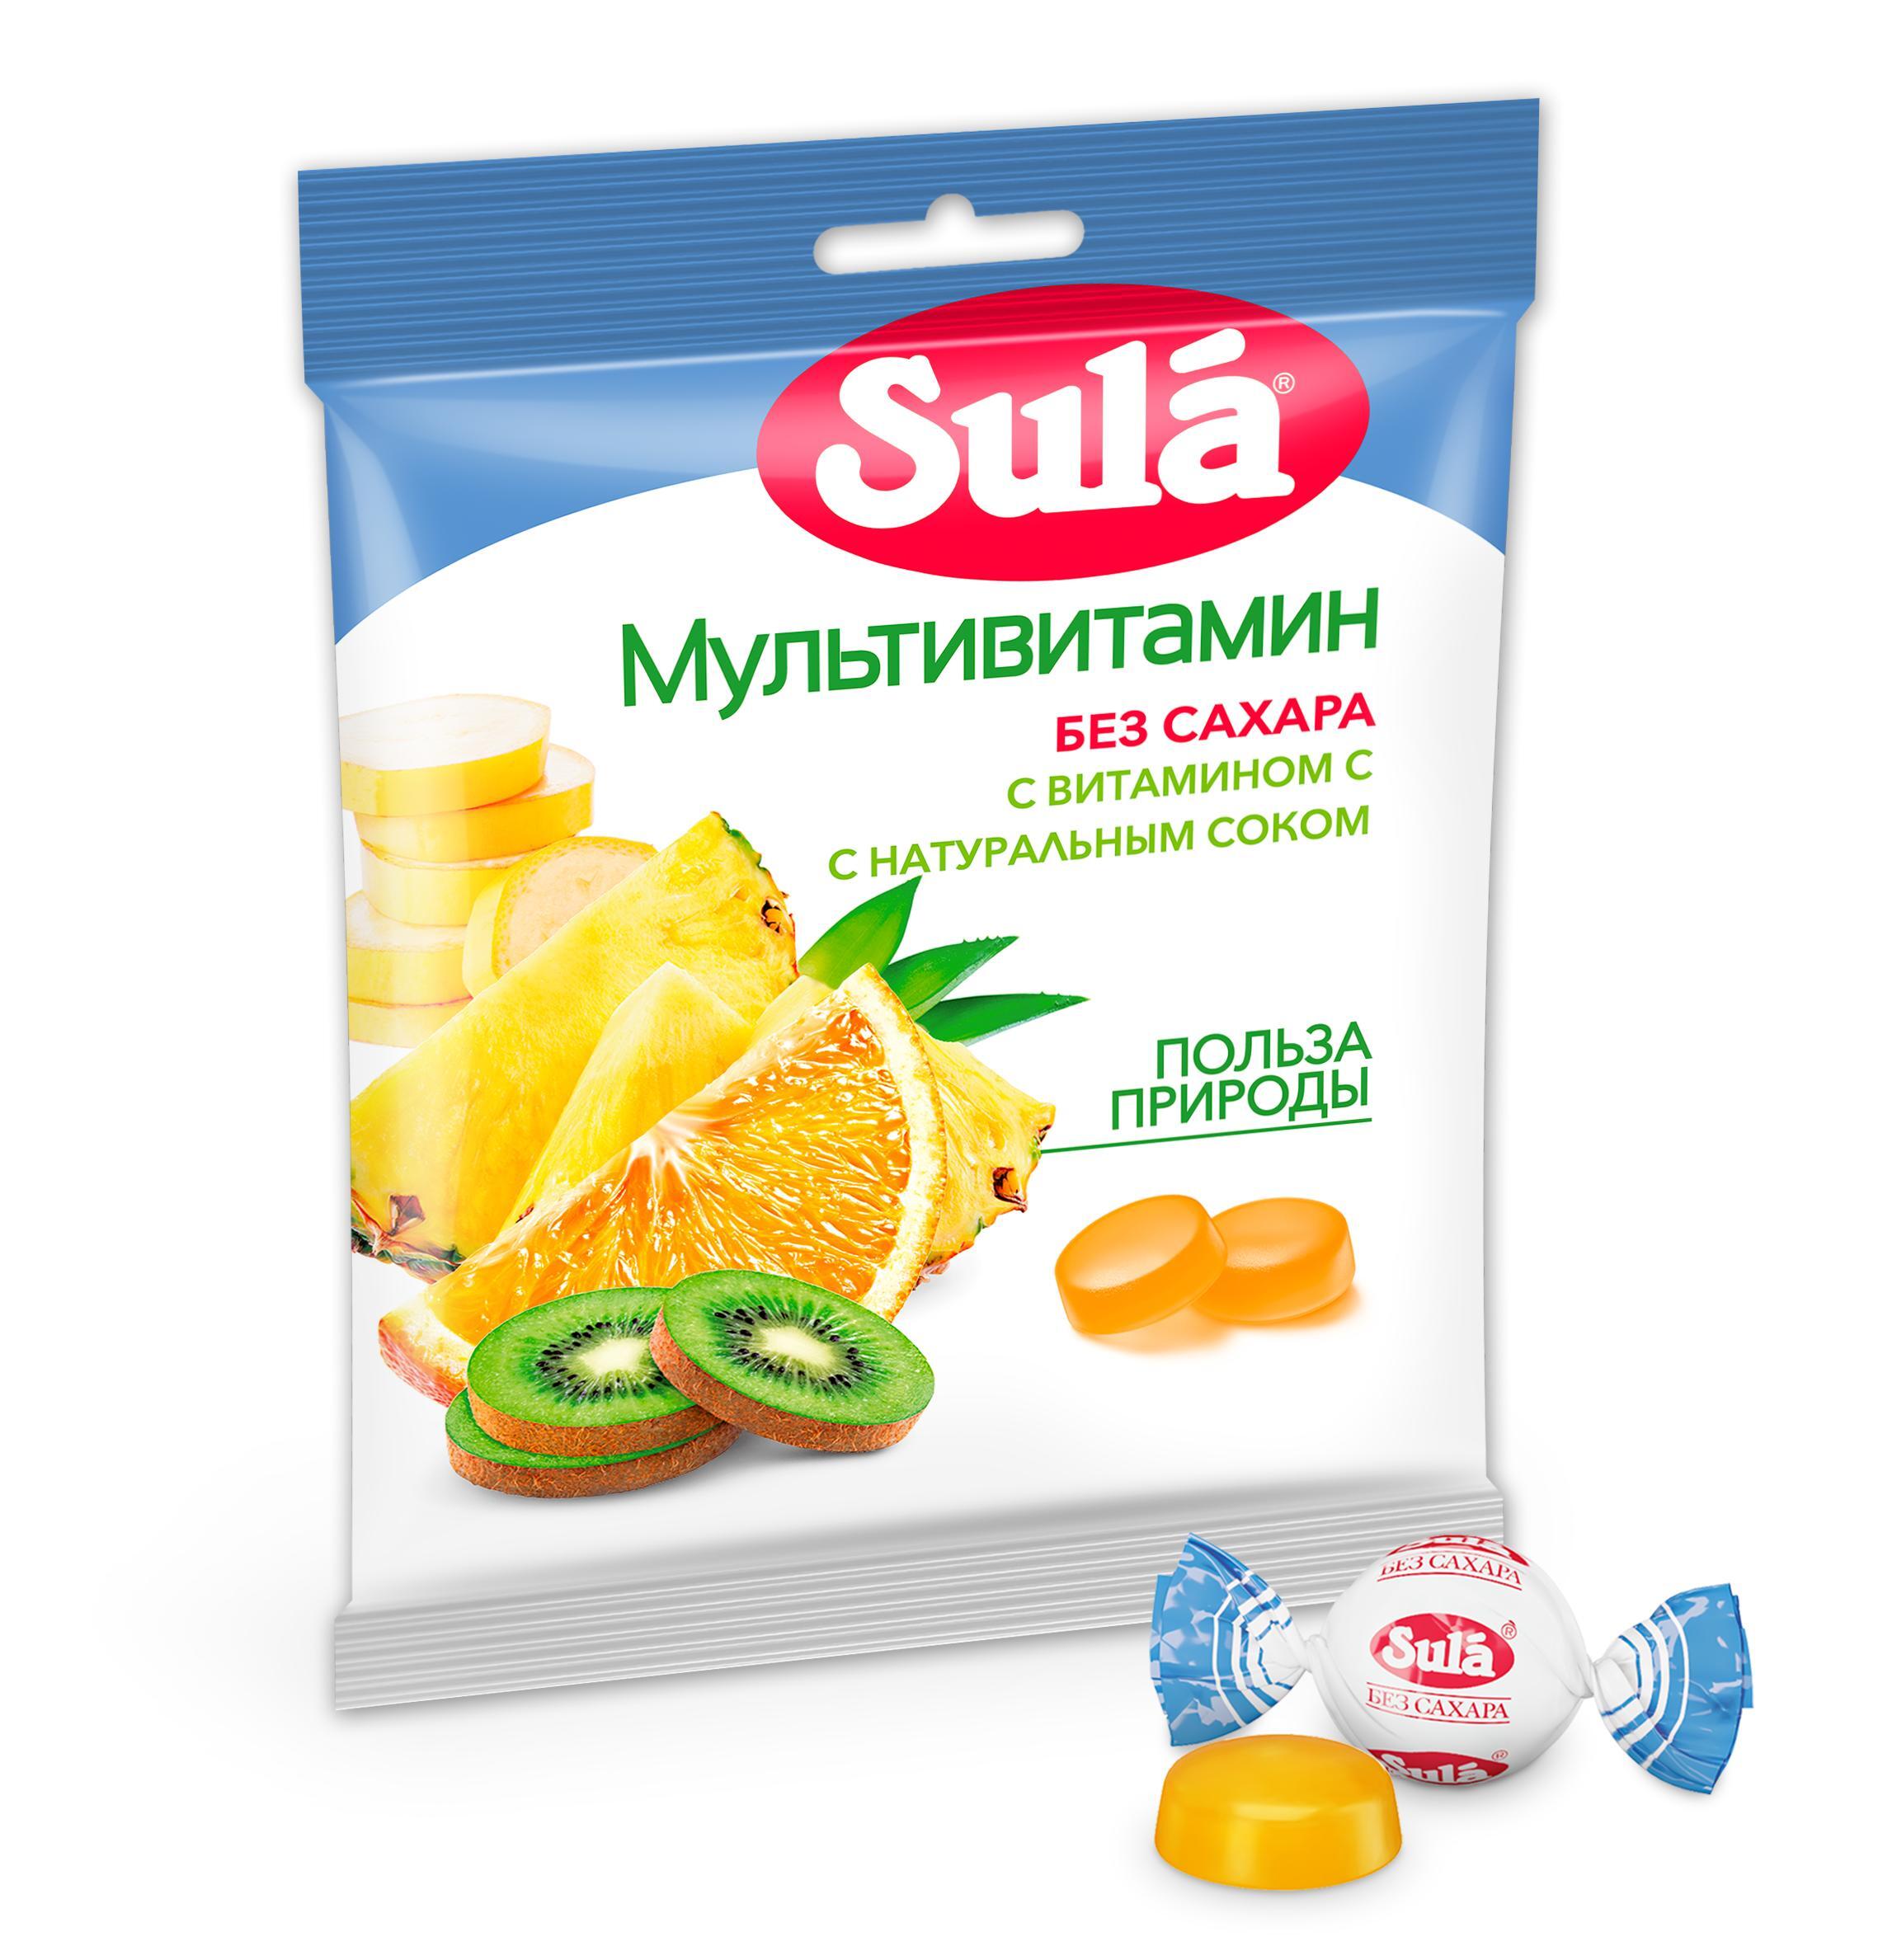 Sula без сахара купить. Леденцы sula мультивитамин. Sula без сахара мультивитамин 60г. 60г Зула леденцы. Леденцы мультивитамин, sula, 60 гр.